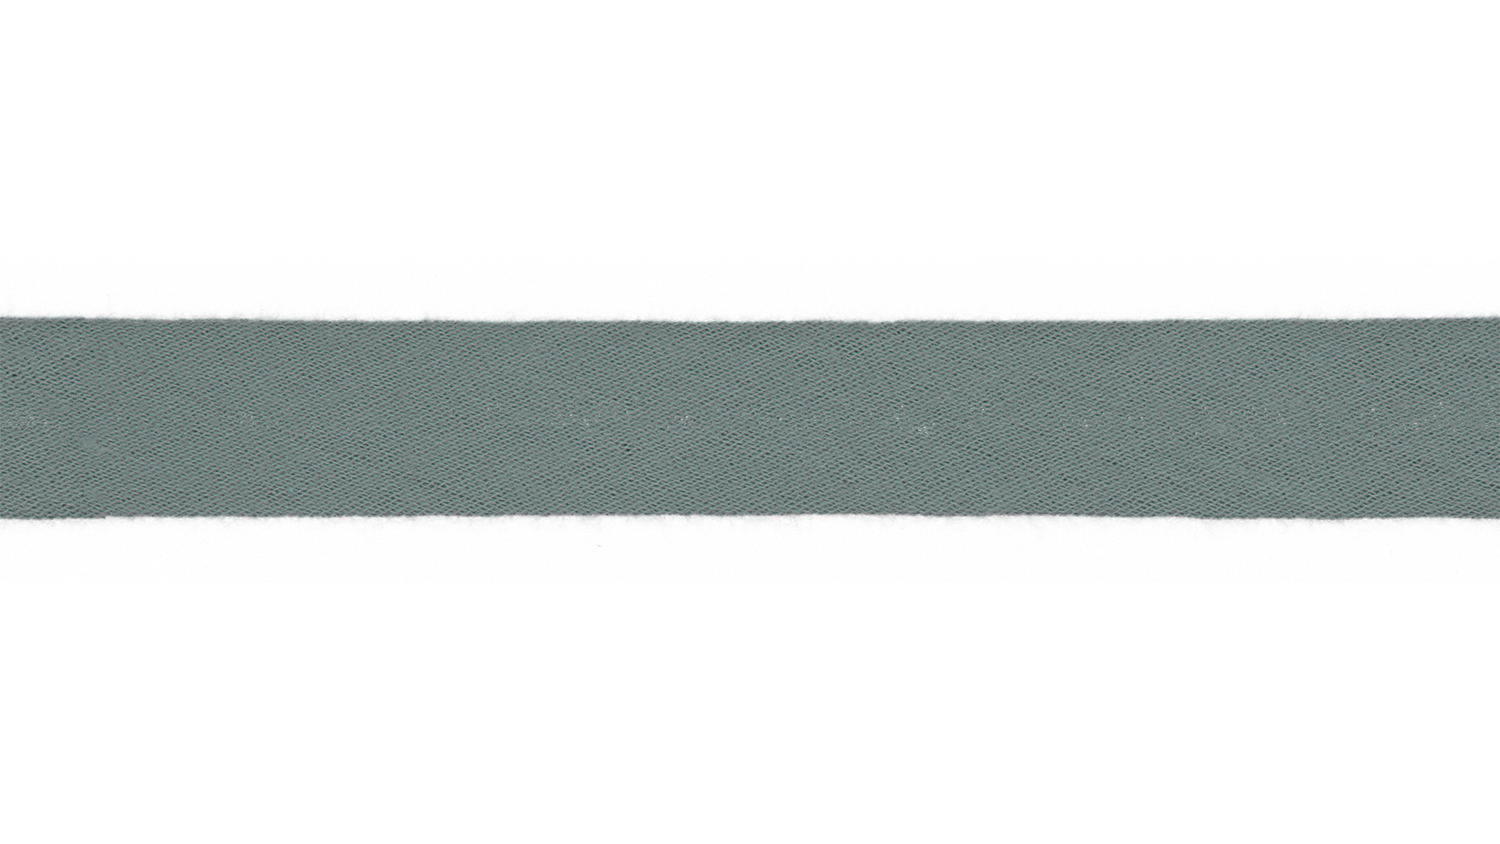 Schrägband Musselin uni dusty blue (003) 